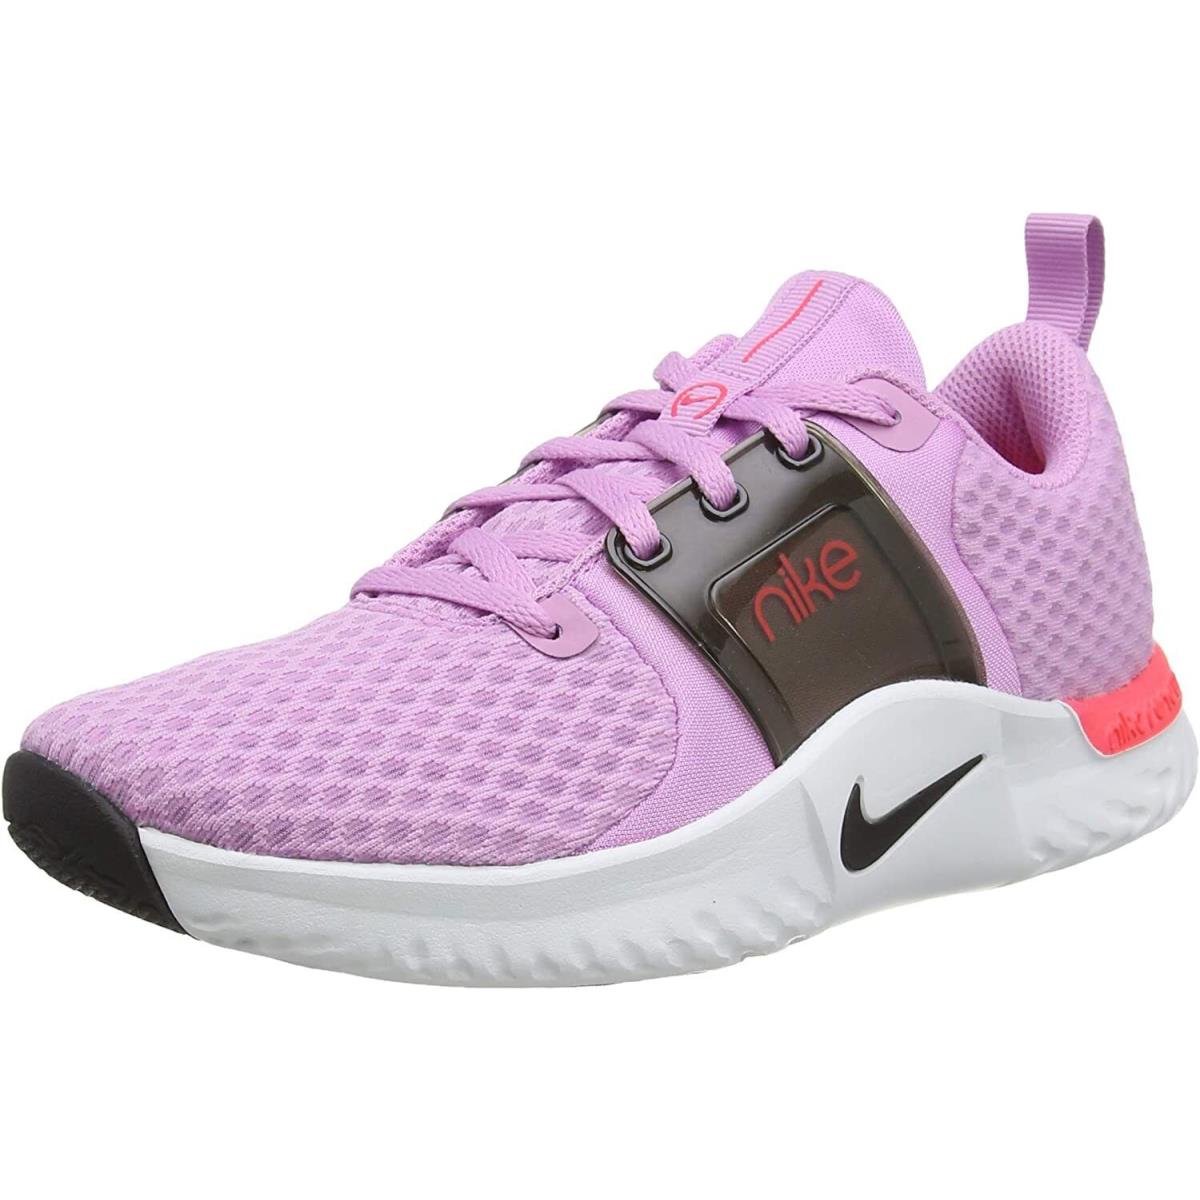 Nike Re In Season TR 10 Running Shoes White CK2576 600 sz 8.5-10 Pink